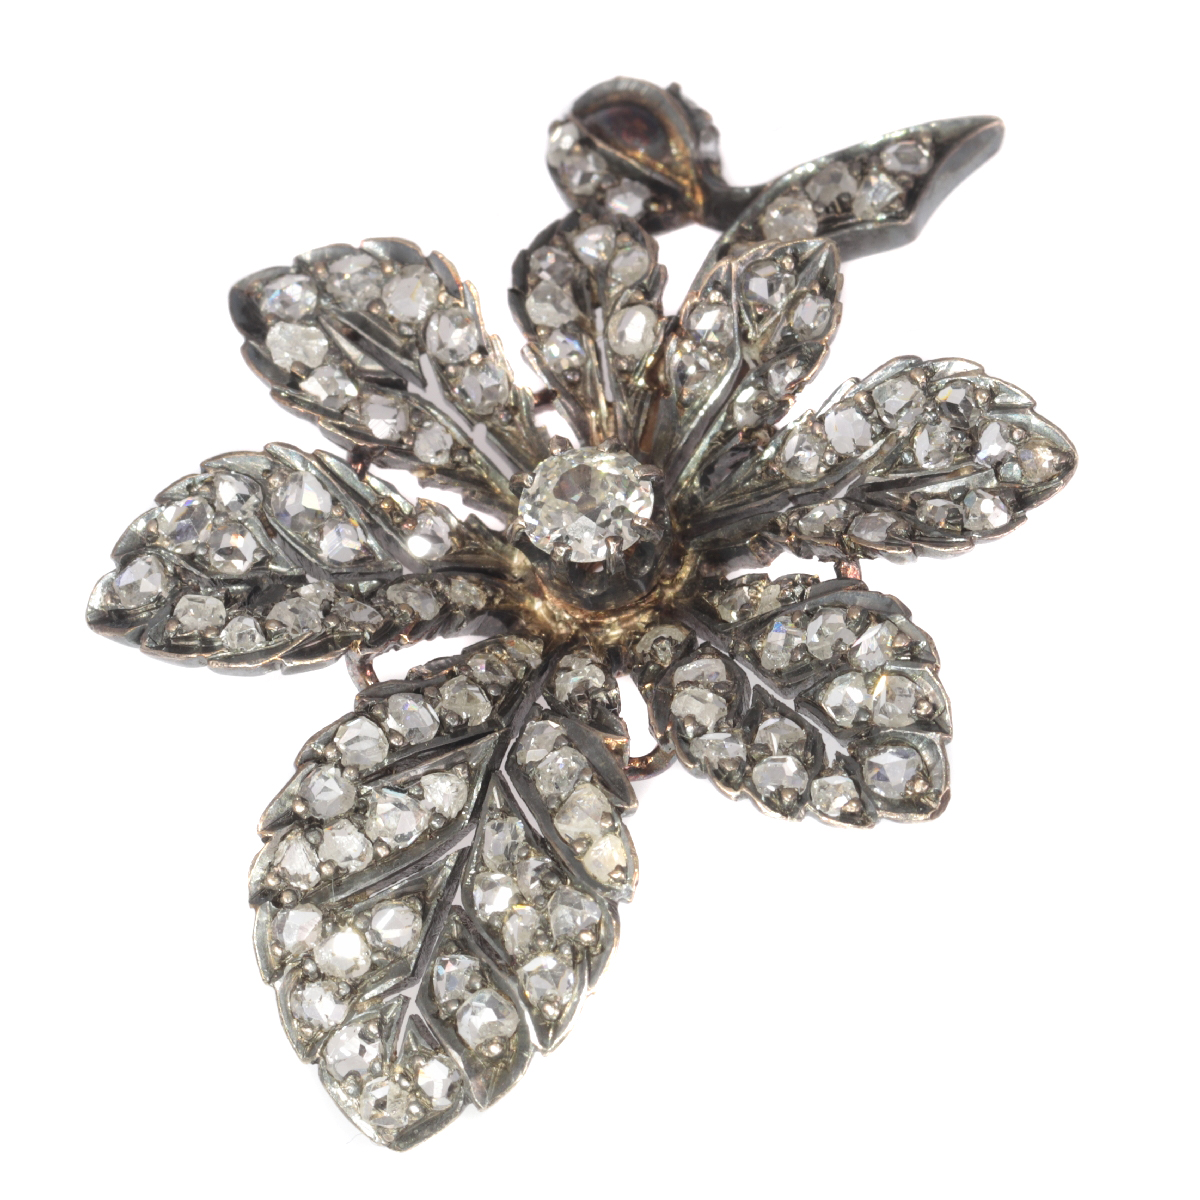 Antique Victorian chestnut leaf brooch fully embellished with over 100 diamonds